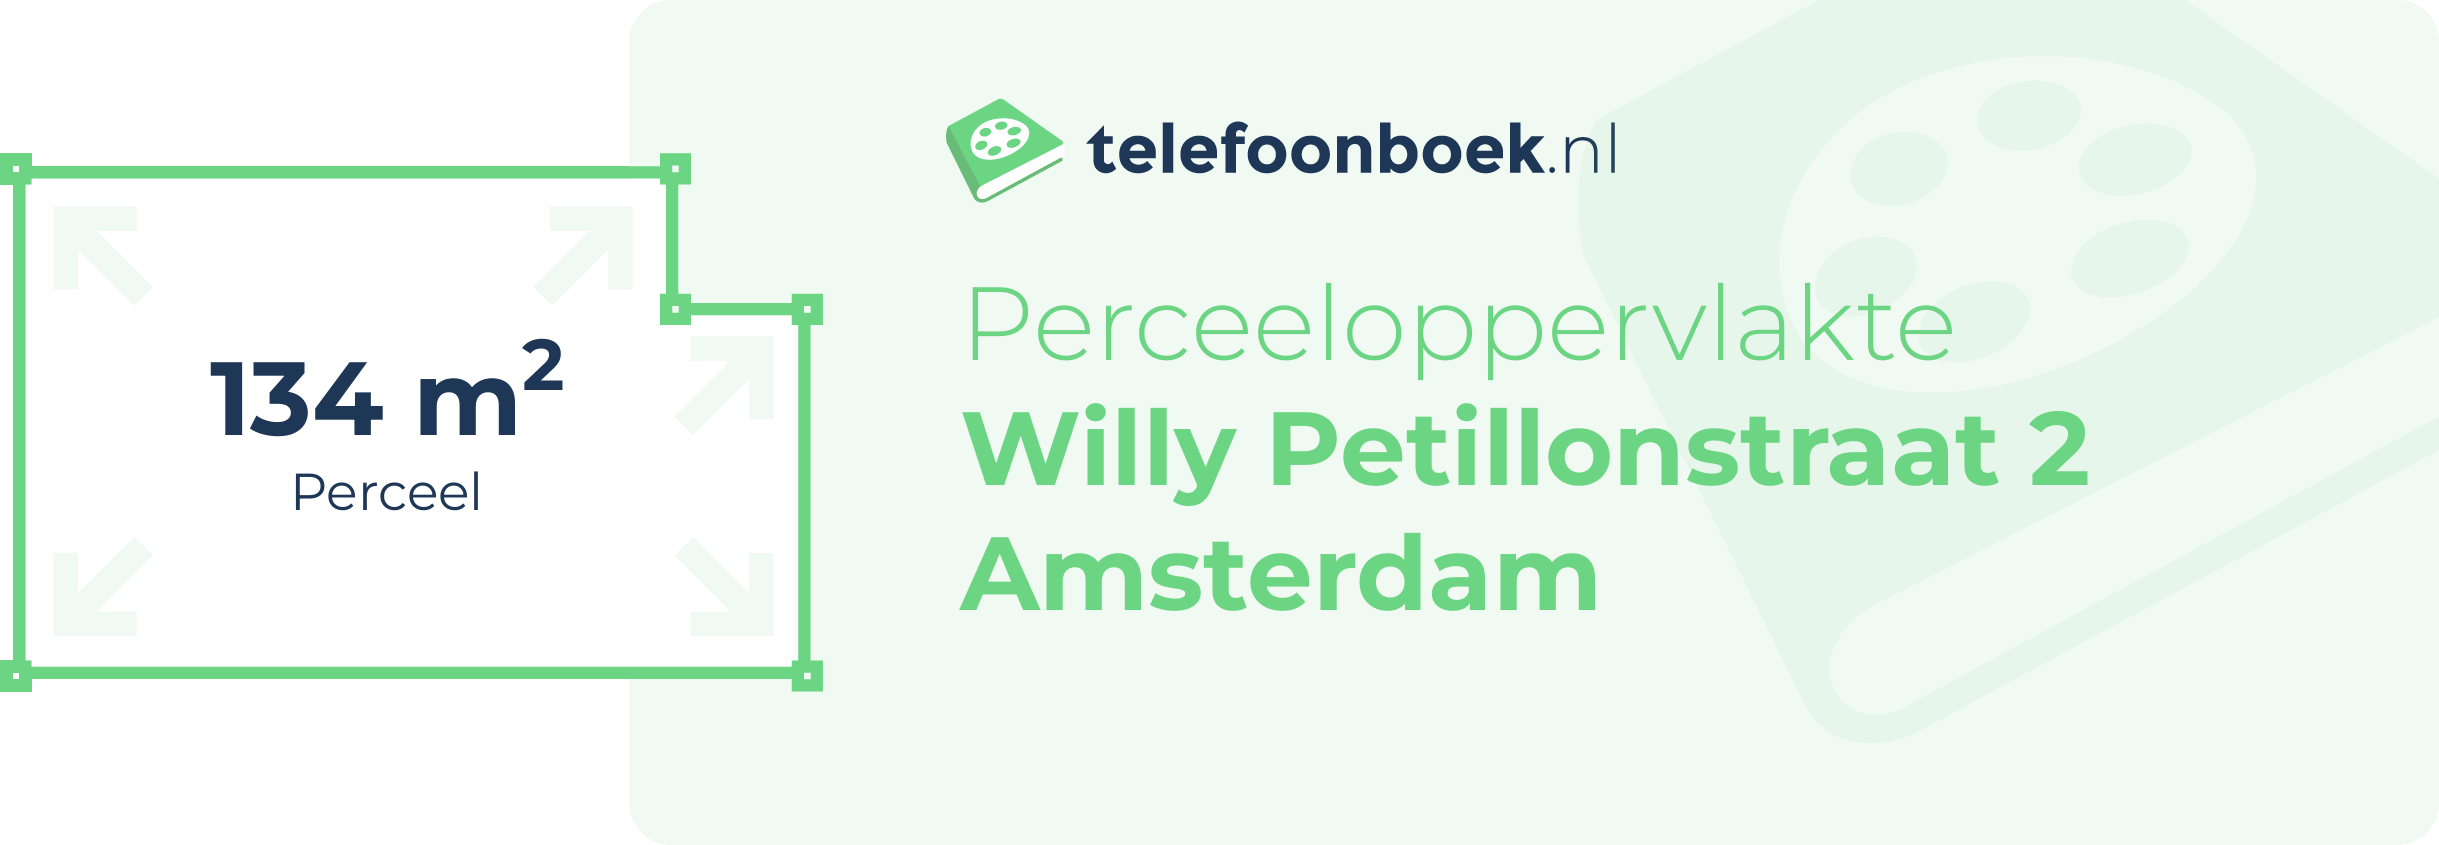 Perceeloppervlakte Willy Petillonstraat 2 Amsterdam